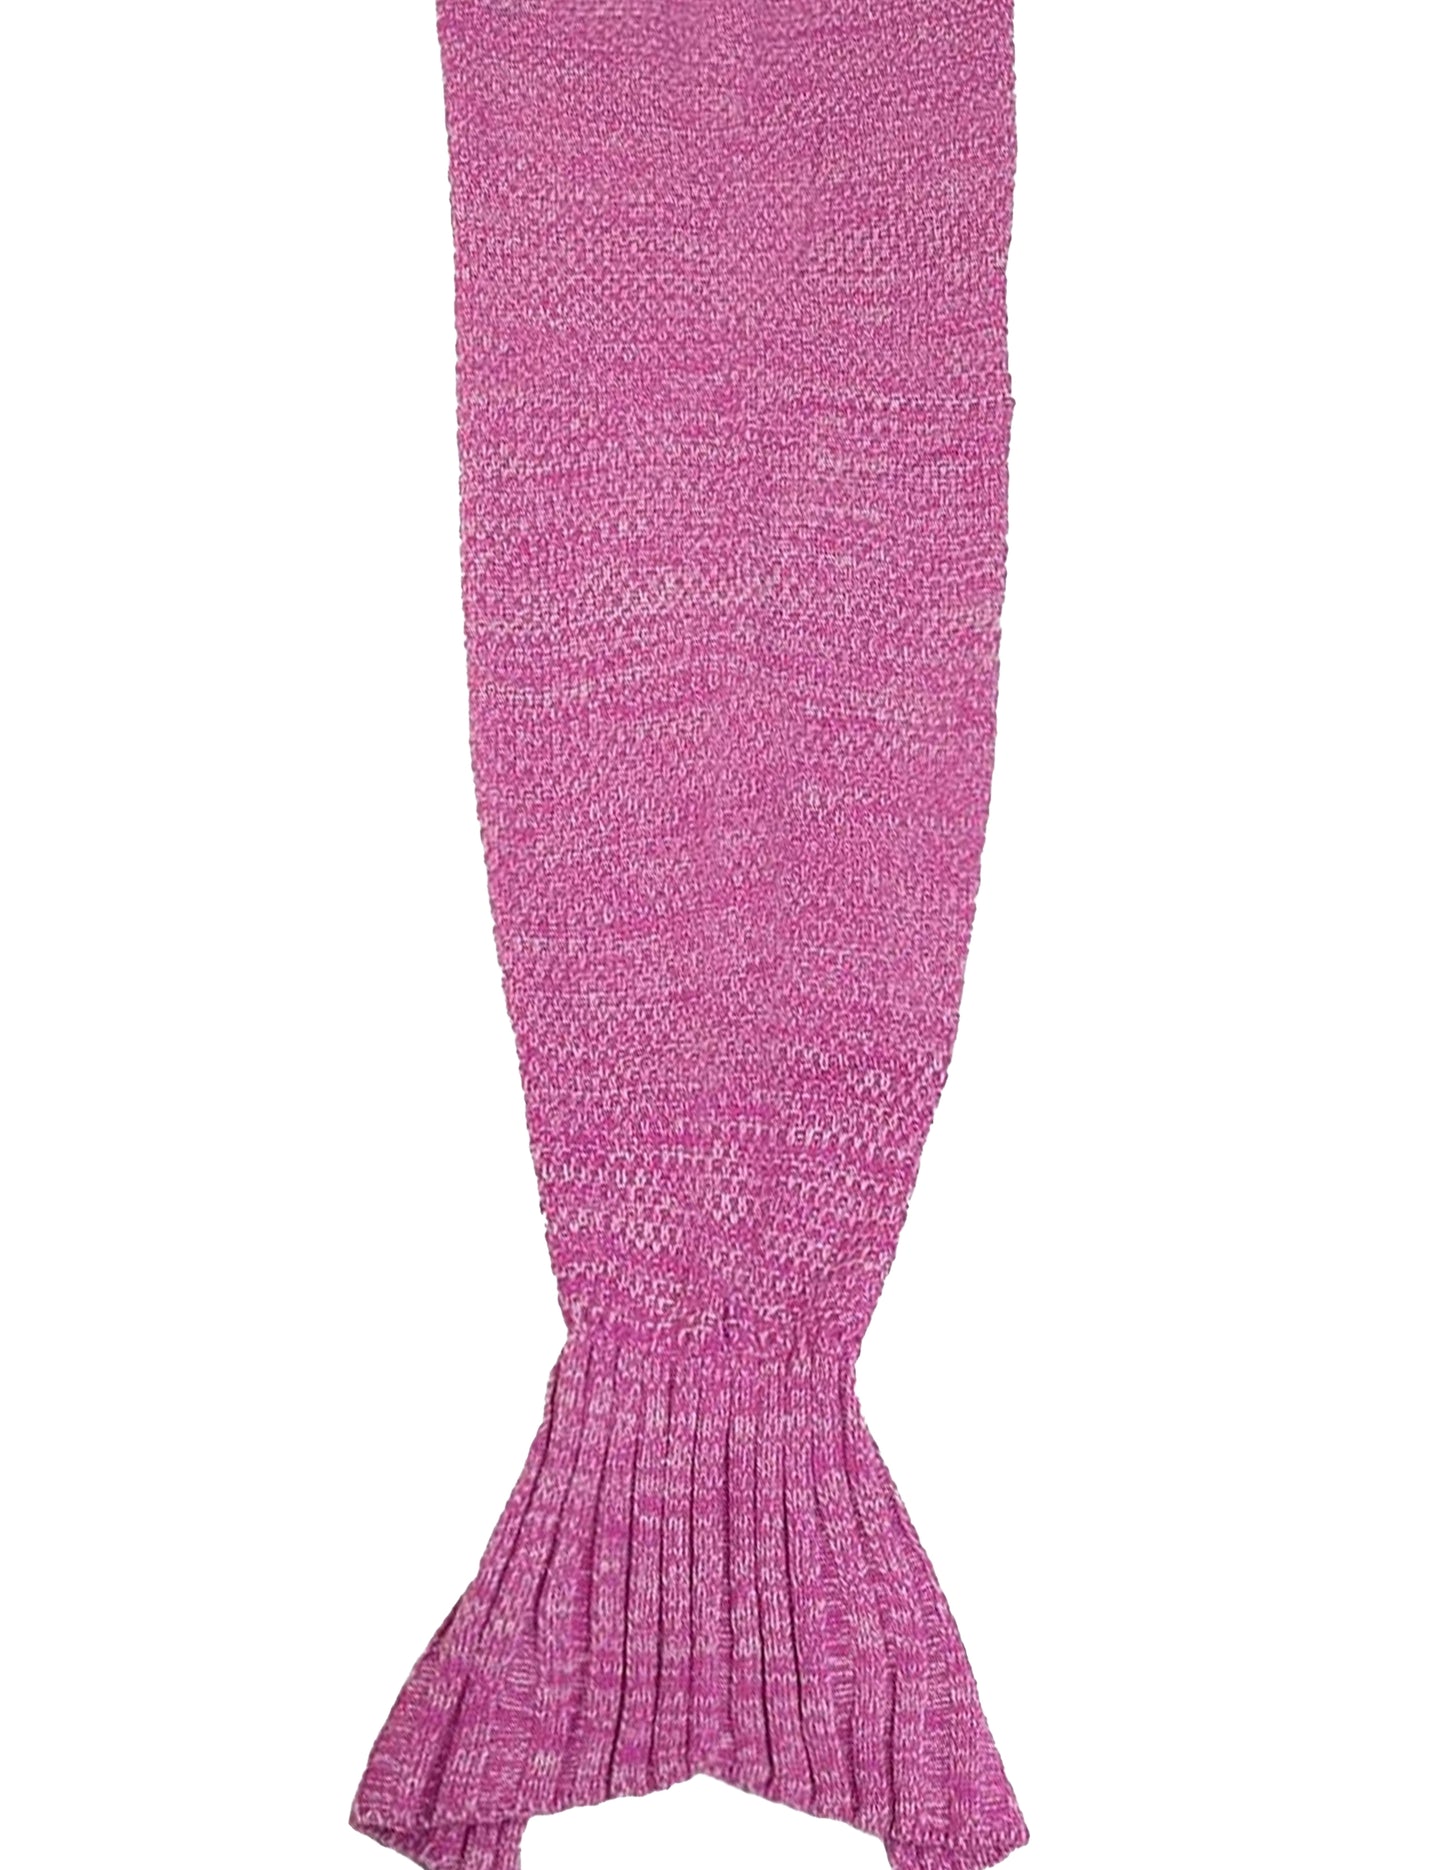 Crochet Adult/Teen/Kids Mermaid Blanket with Tail fuchsia-White